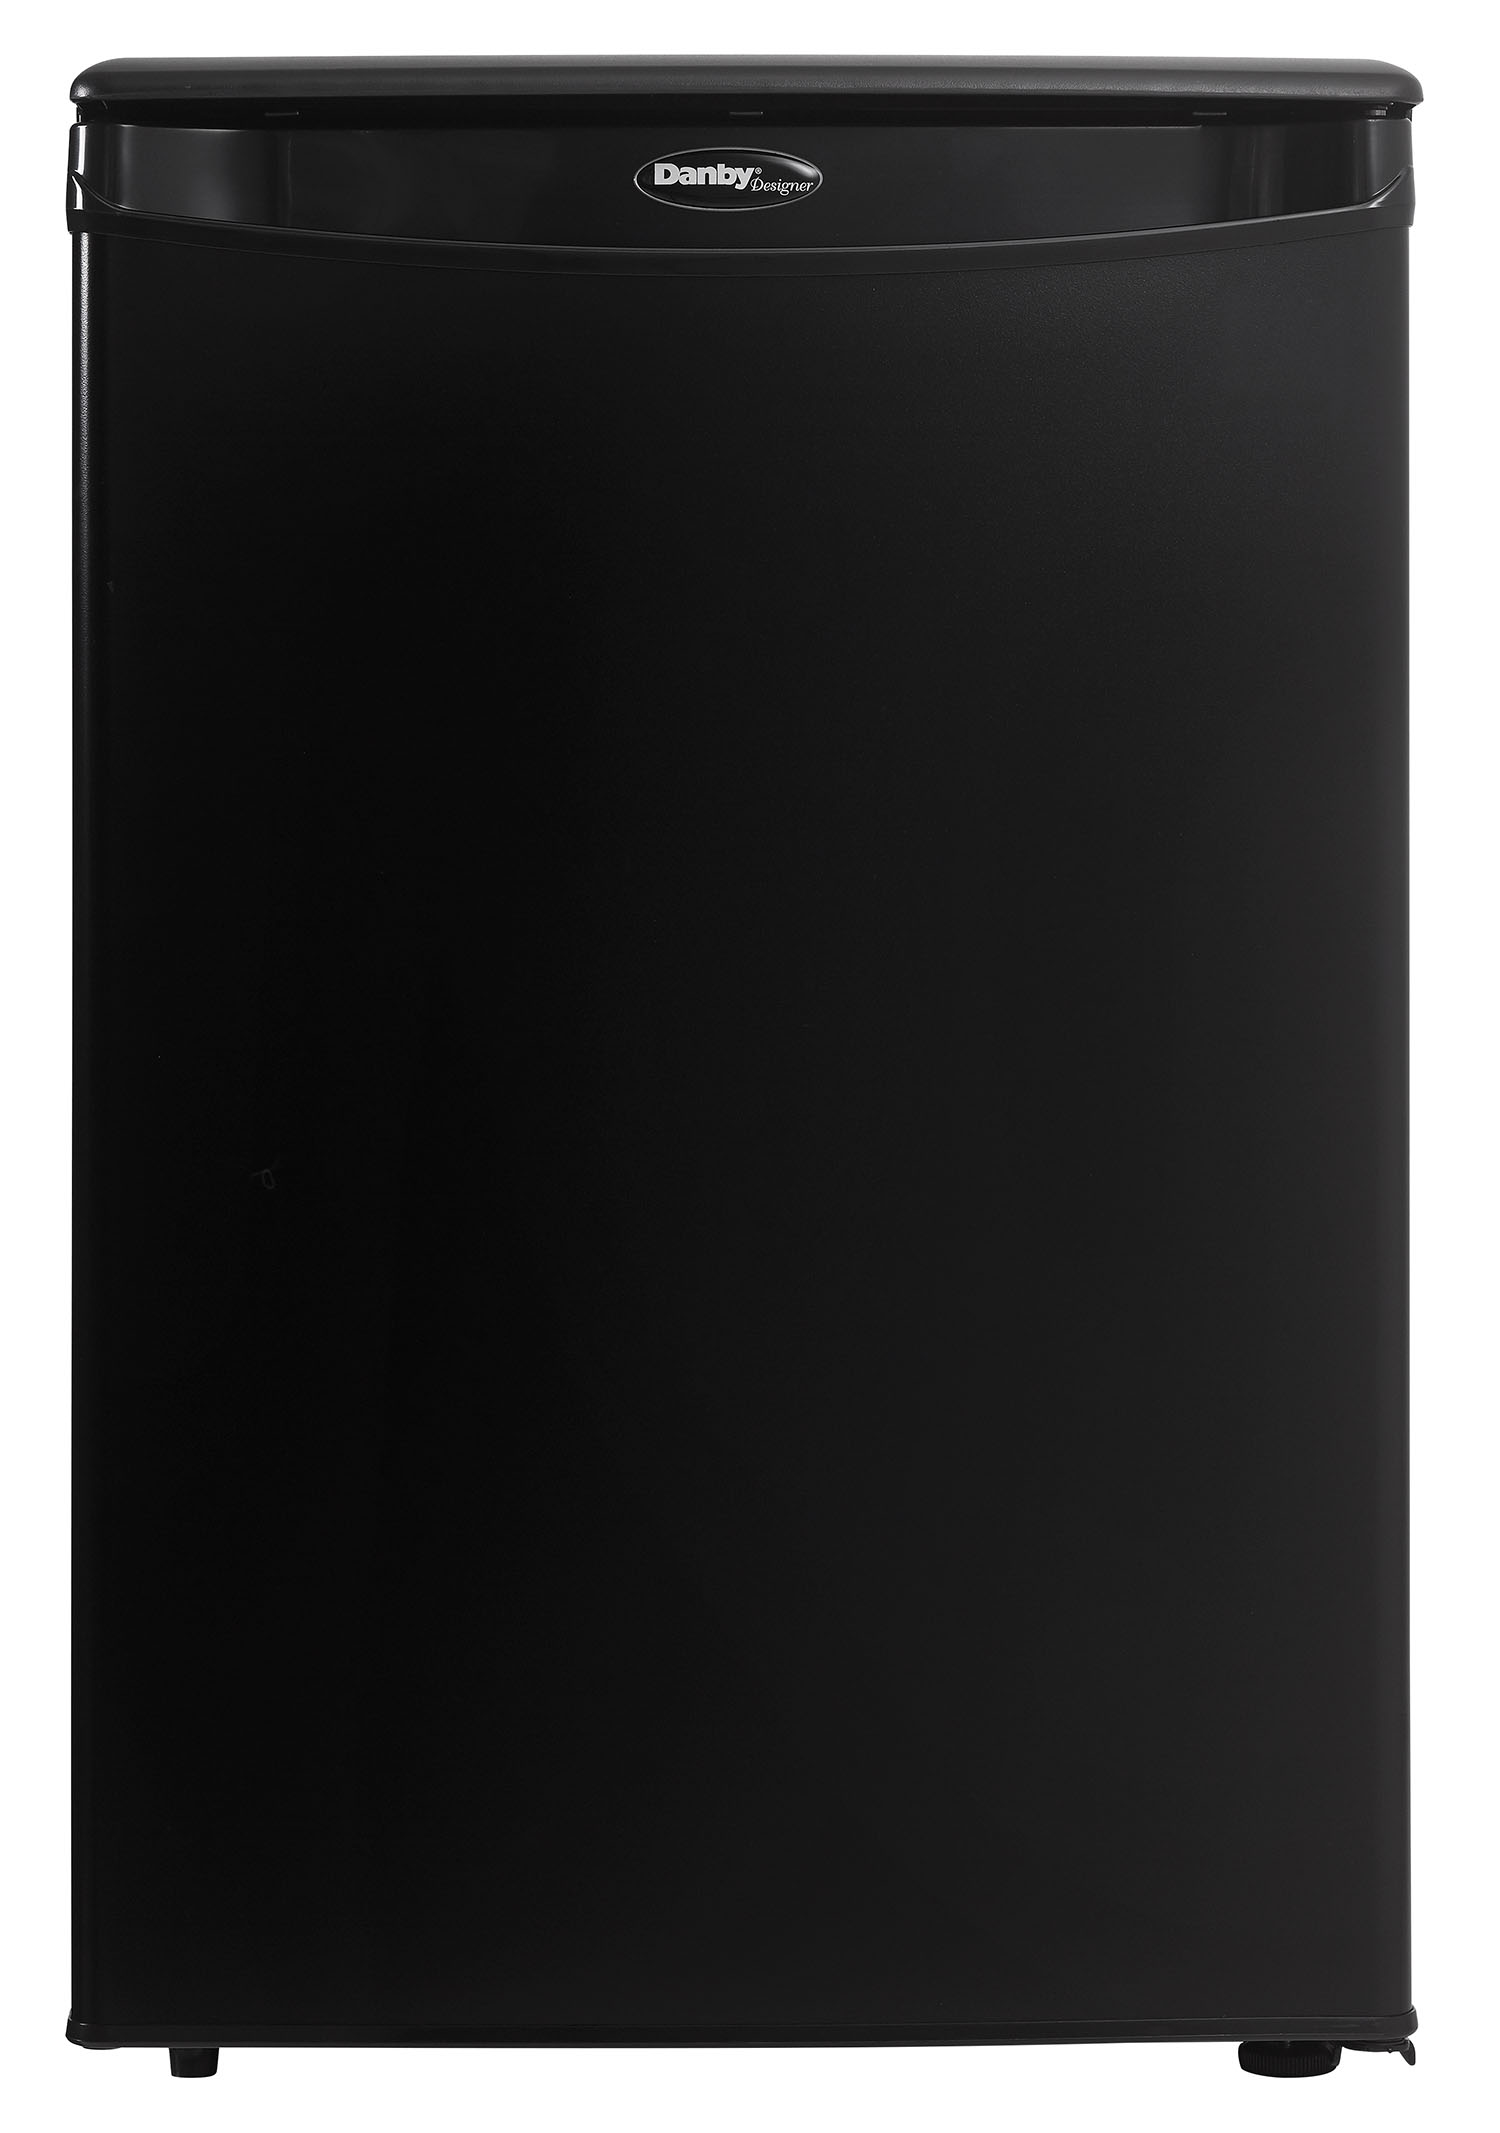 Danby Dar026A1bdd Designer Compact All Refrigerator, 2.6-Cubic Feet, Black